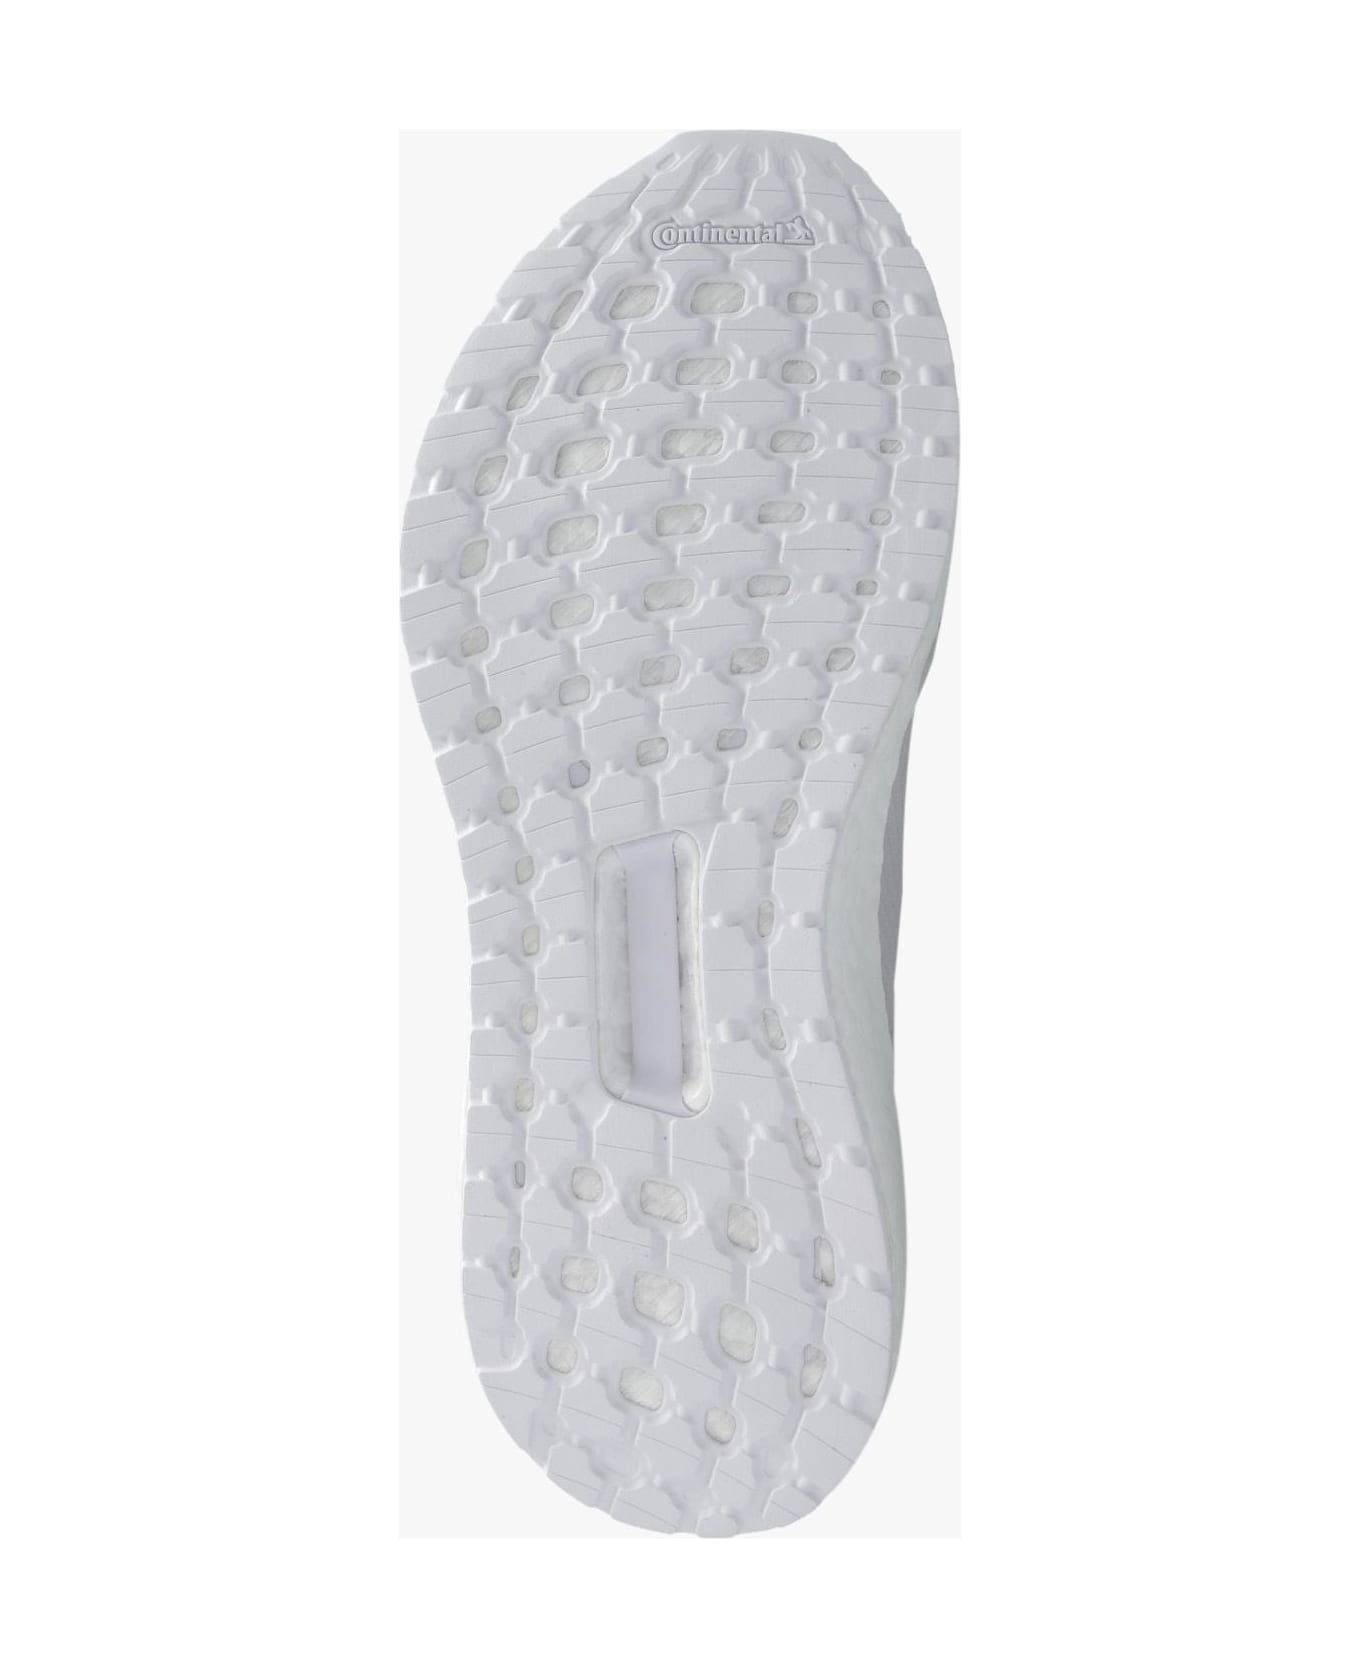 Adidas by Stella McCartney 'ultraboost 20' Sneakers - White スニーカー